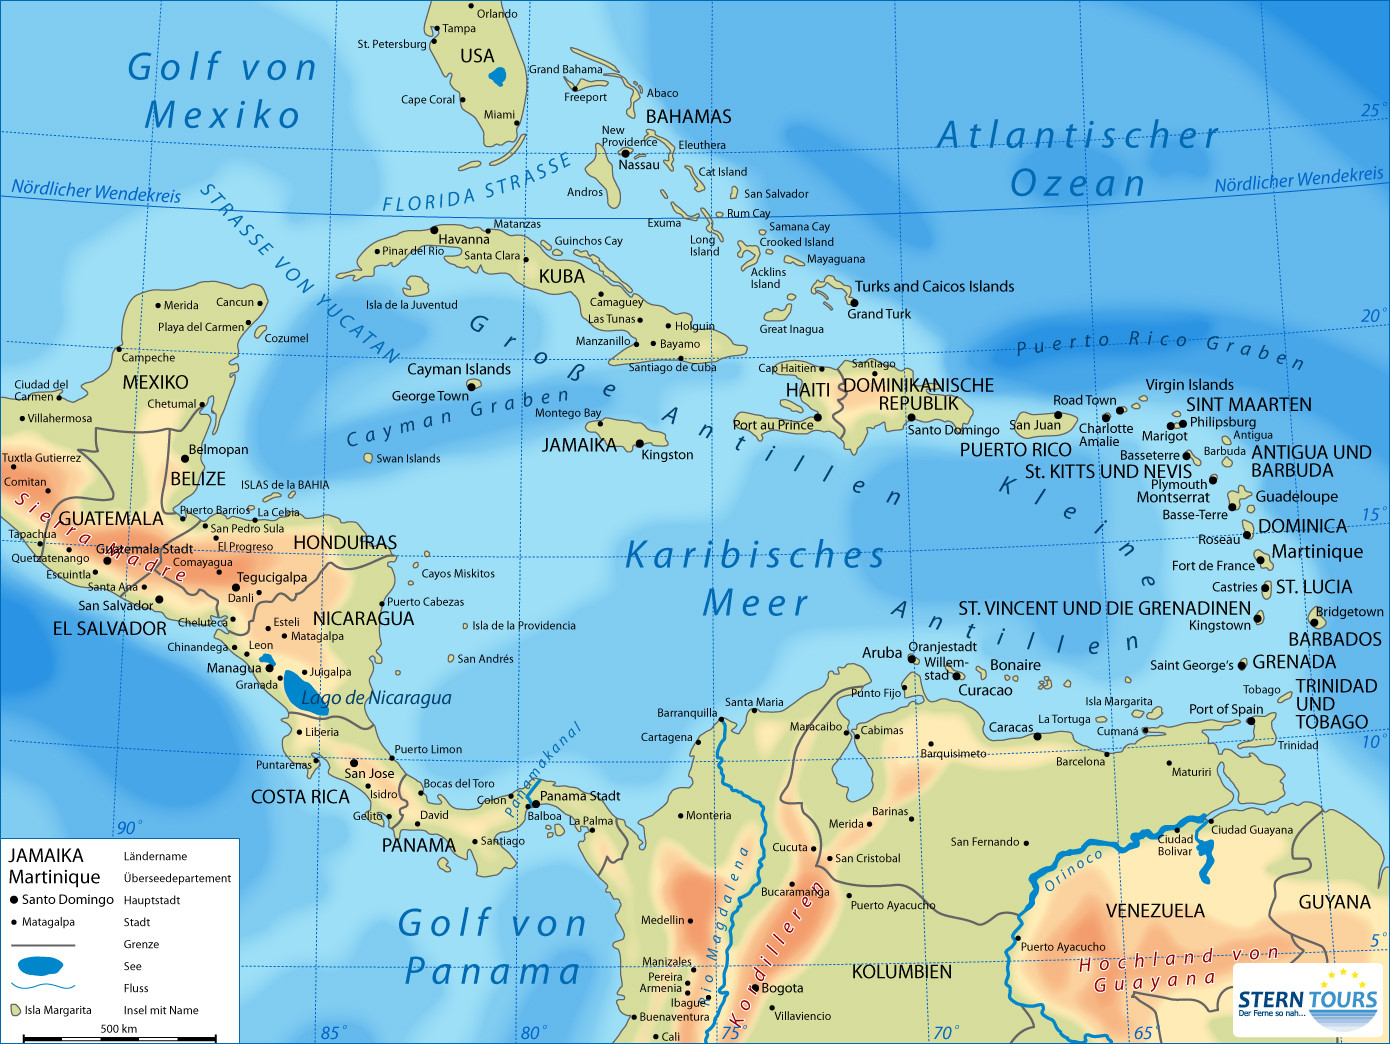 Где находится мартиника. Карибские острова Мартиника. Где находятся Карибские острова на карте. Острова Карибского бассейна на карте.